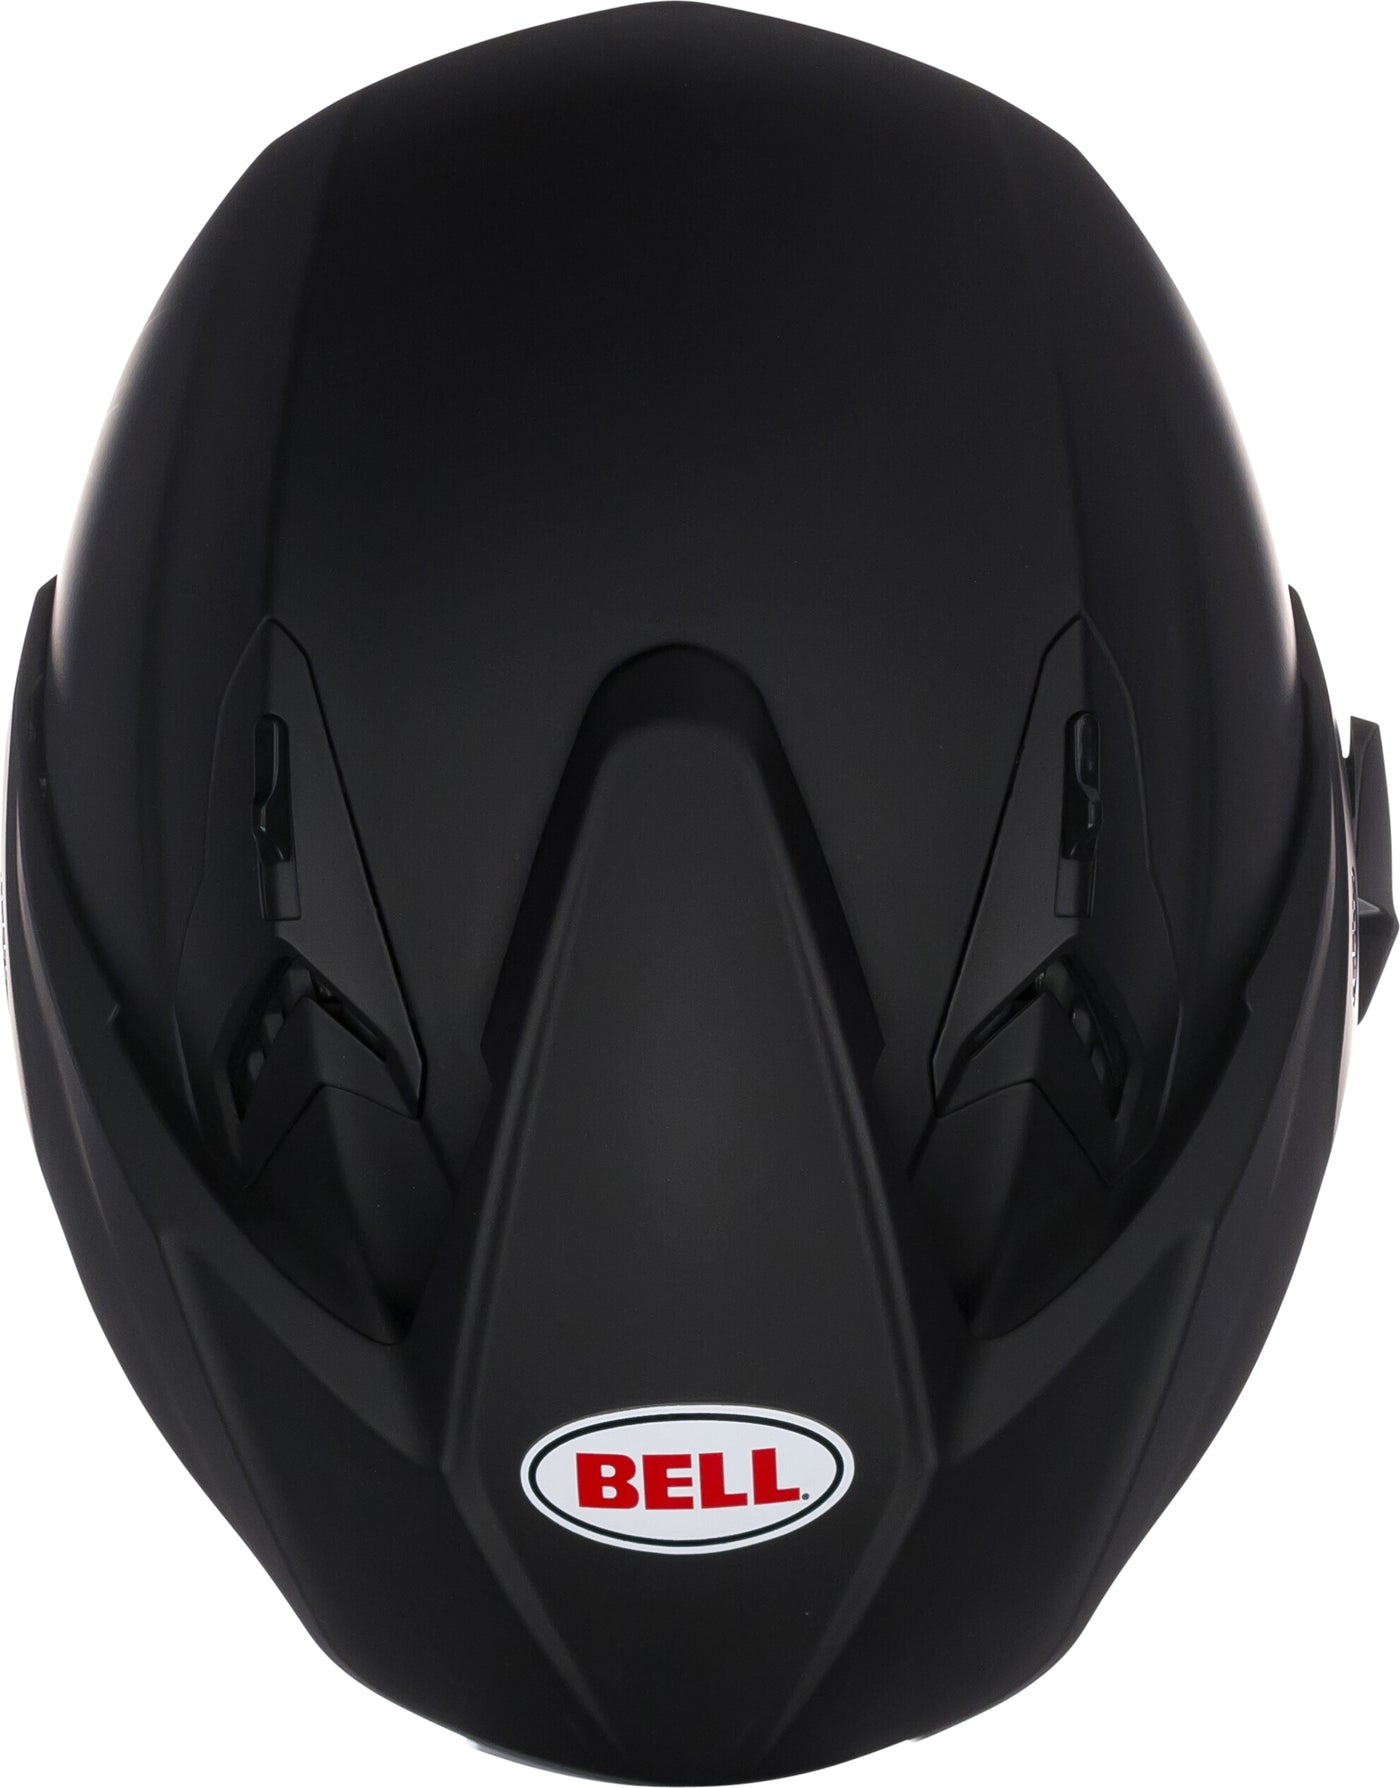 Bell Helmets Mag-9 - Matte Black